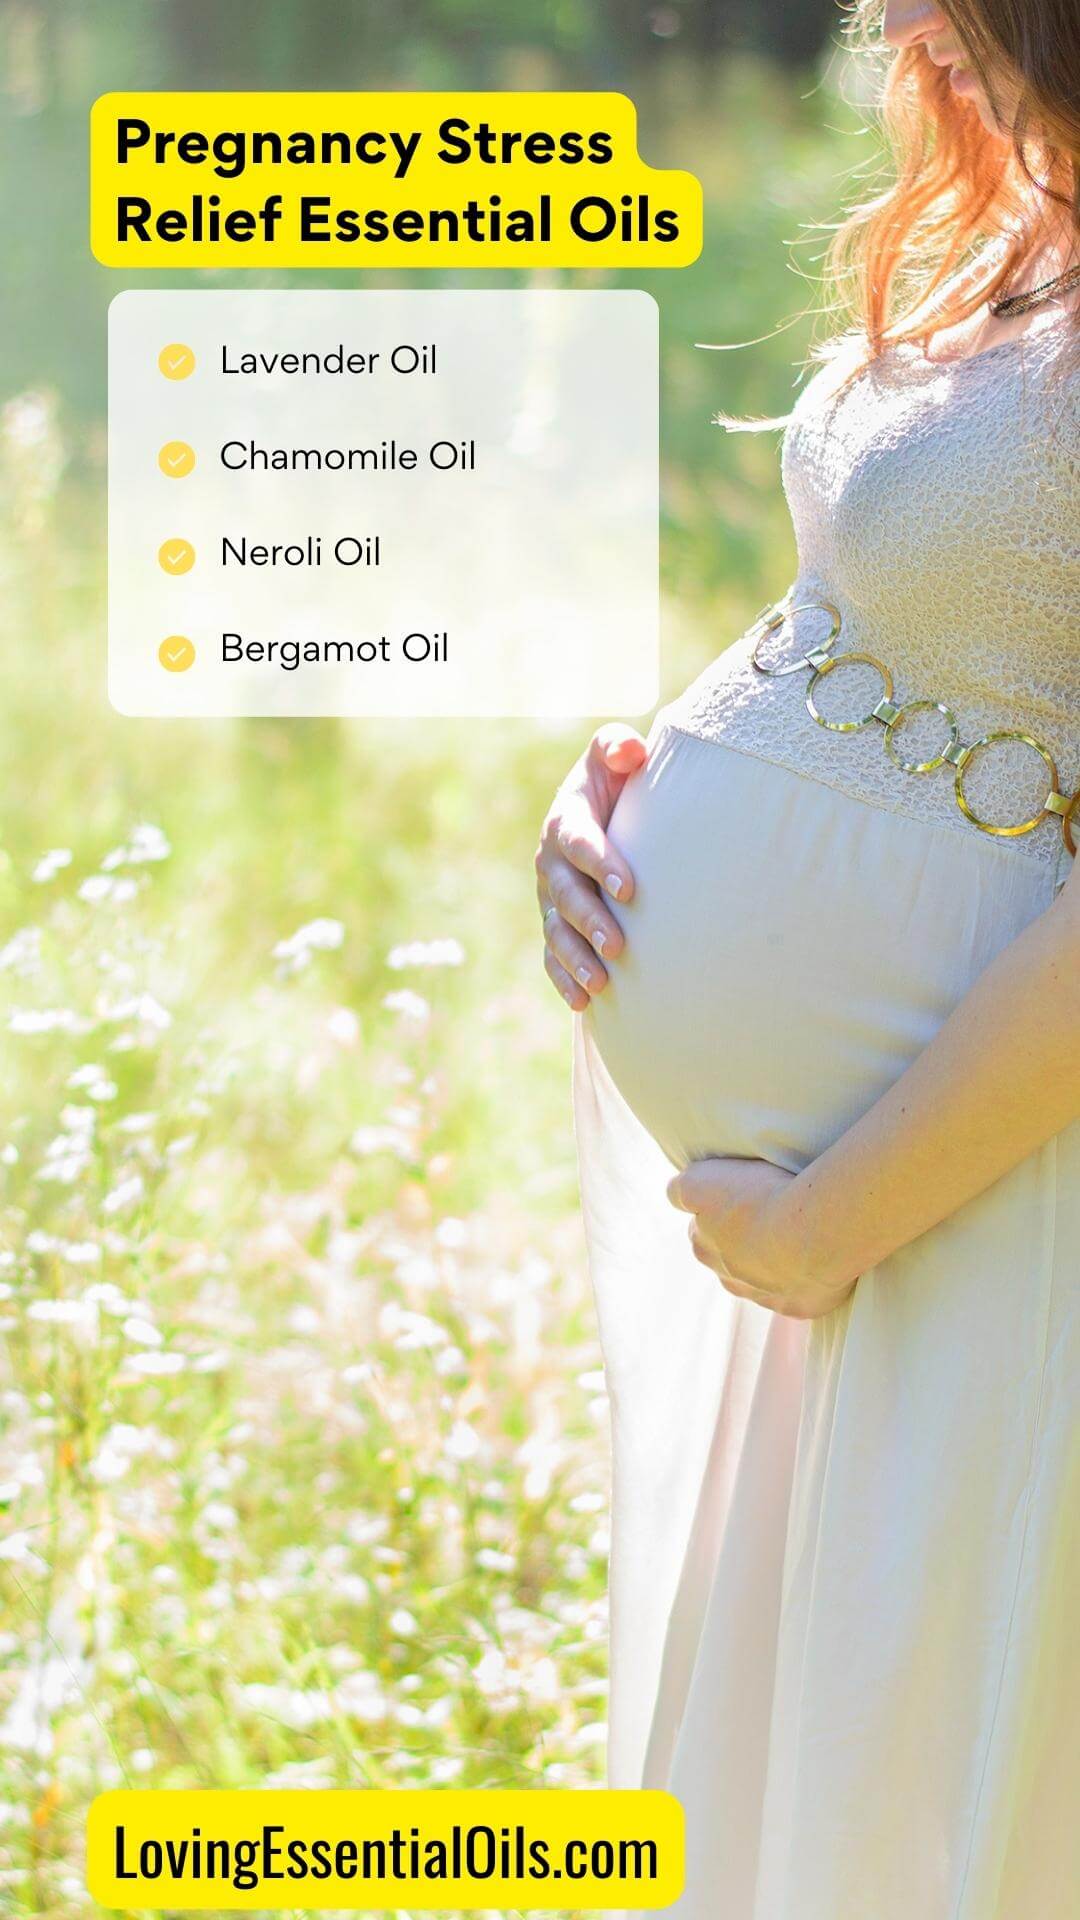 Pregnancy Stress Relief Essential Oils by Loving Essential OIls